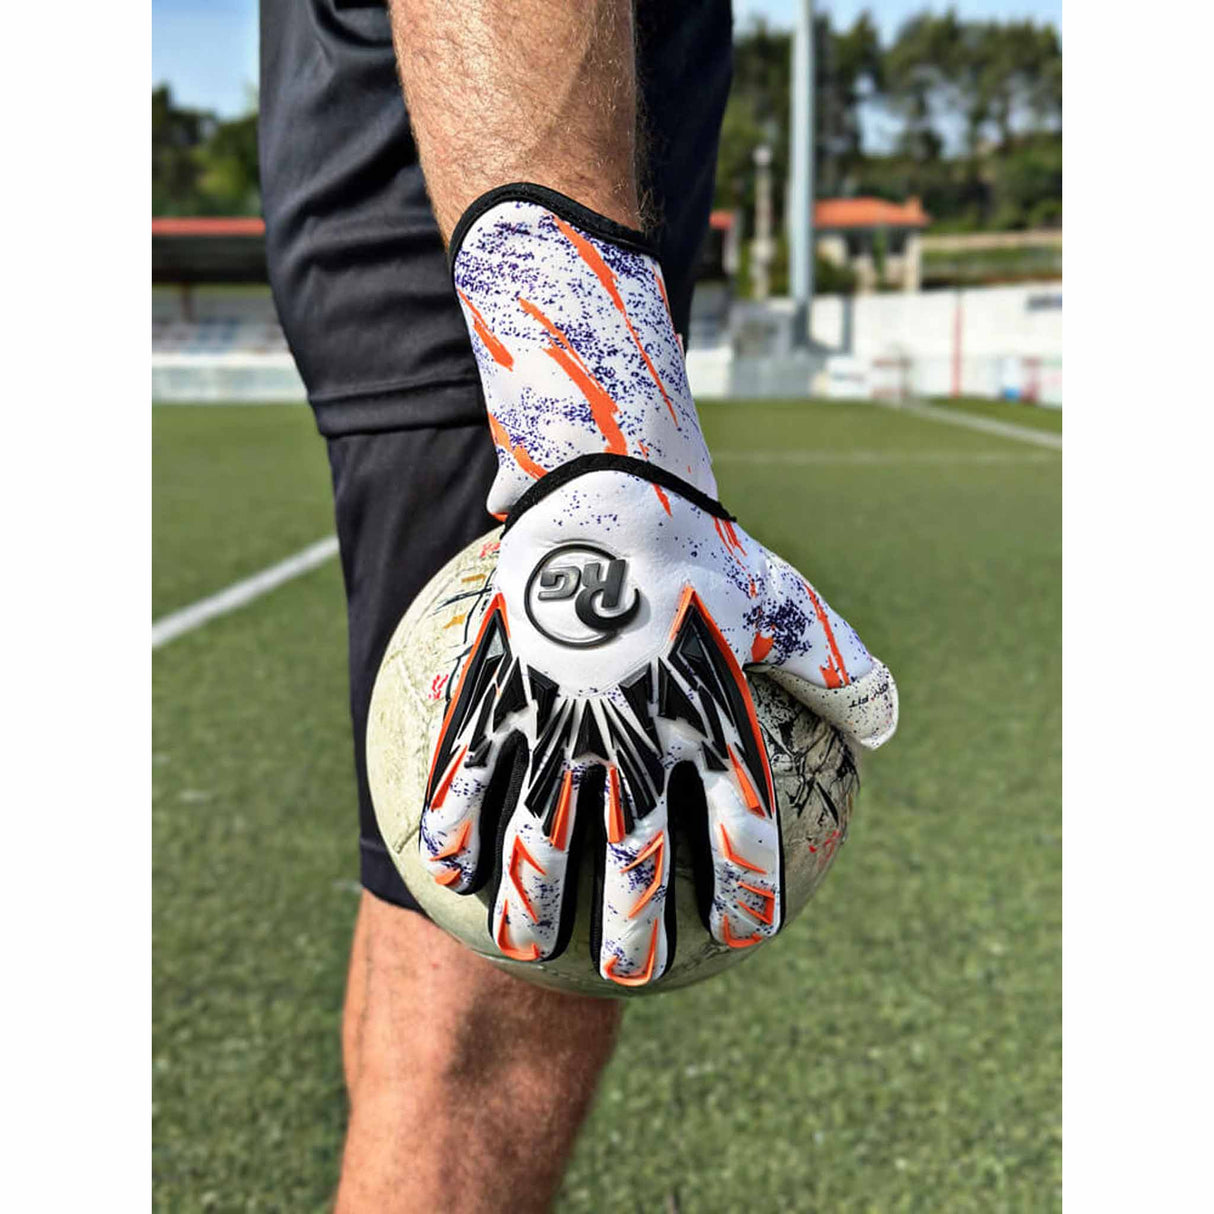 RG Goalkeeper gloves Snaga FS Gants de gardien de but de soccer - Blanc / Orange